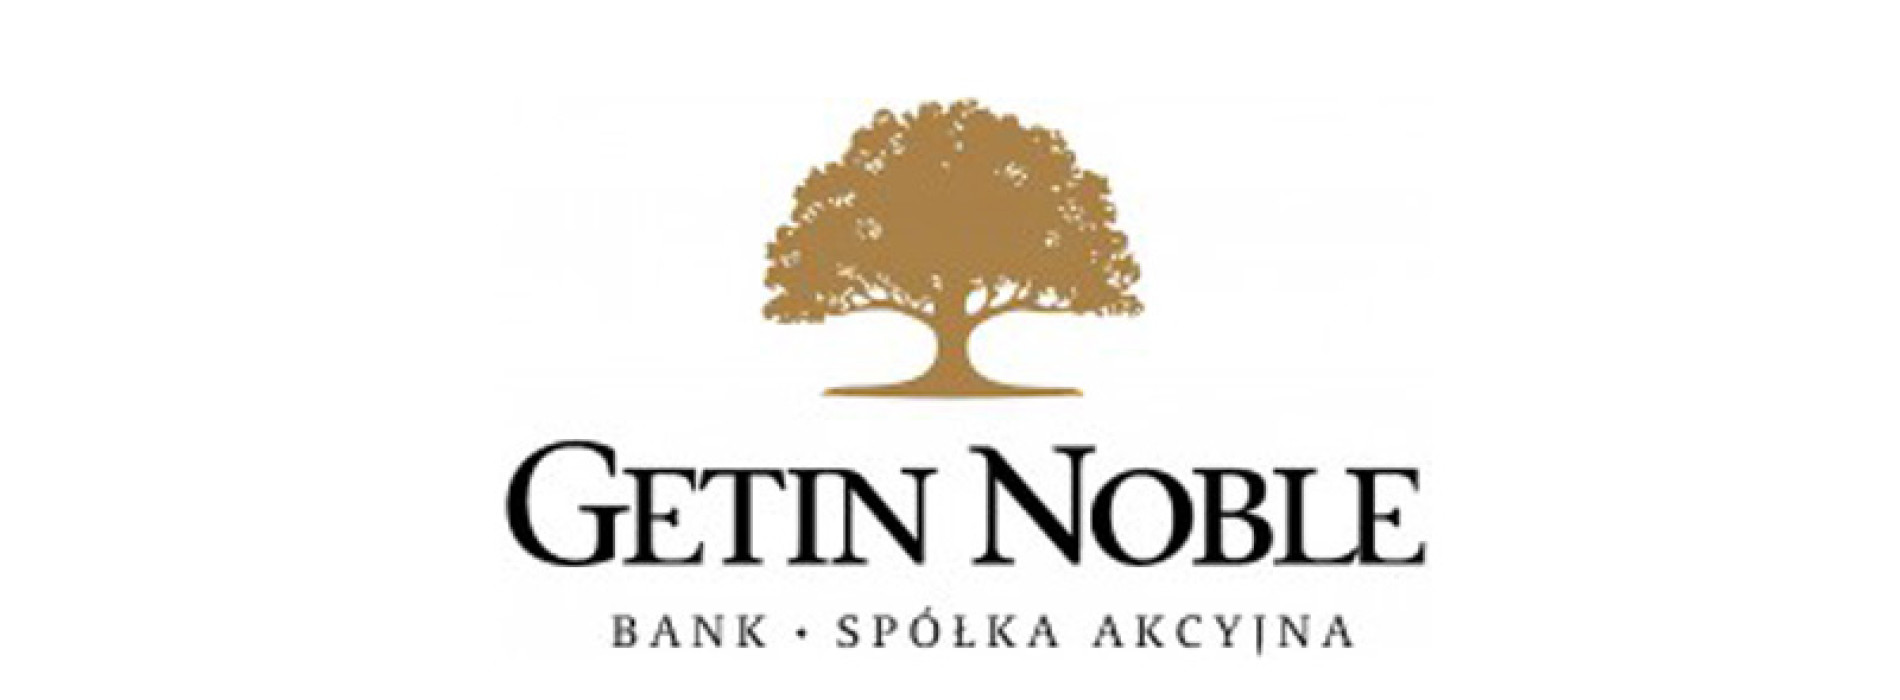 Getin Noble Bank finalistą międzynarodowego konkursu Contactless&Mobile Awards